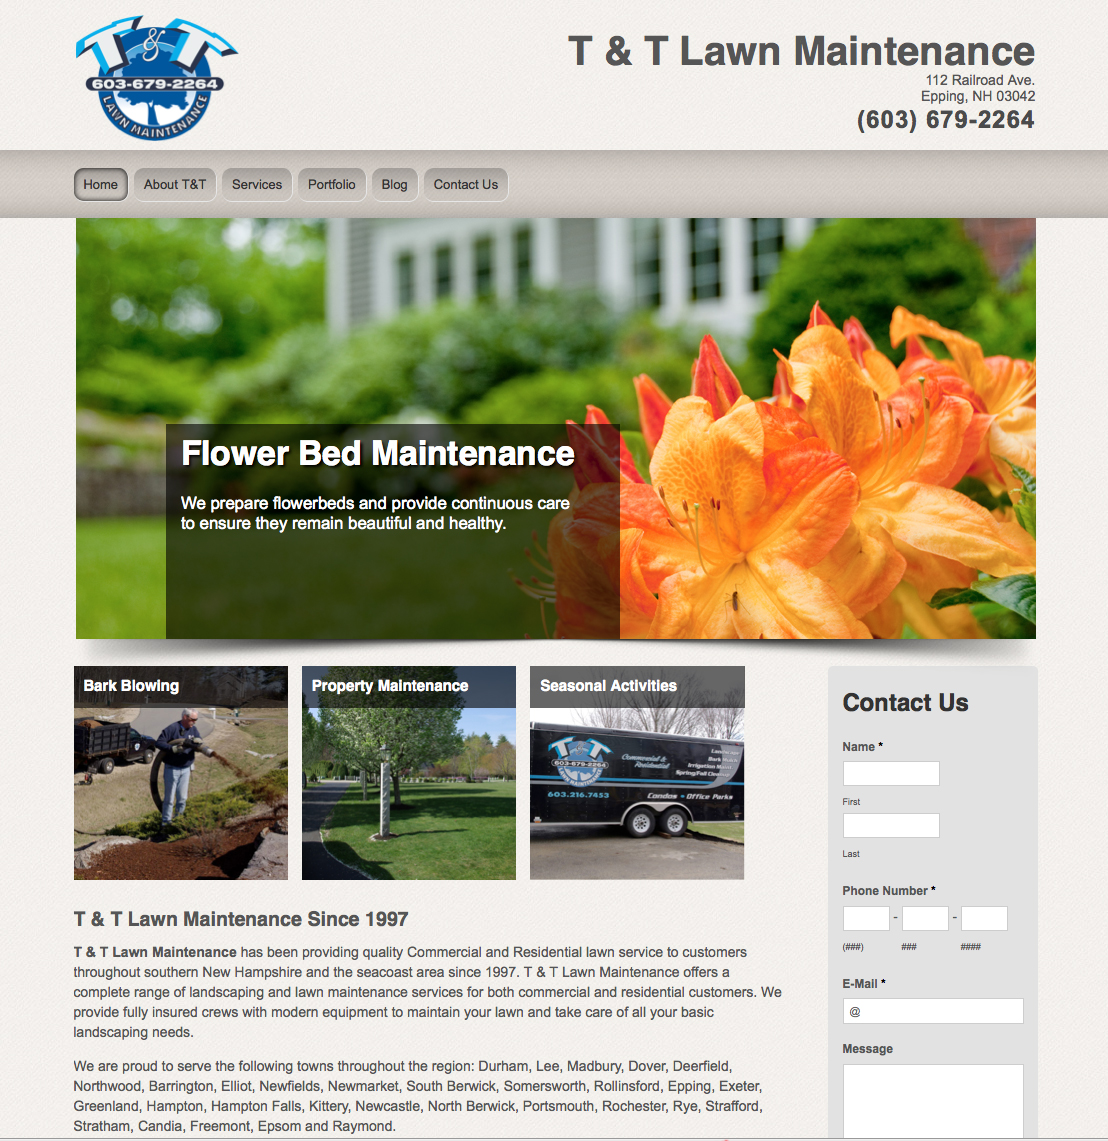 T & T Lawn Maintenance